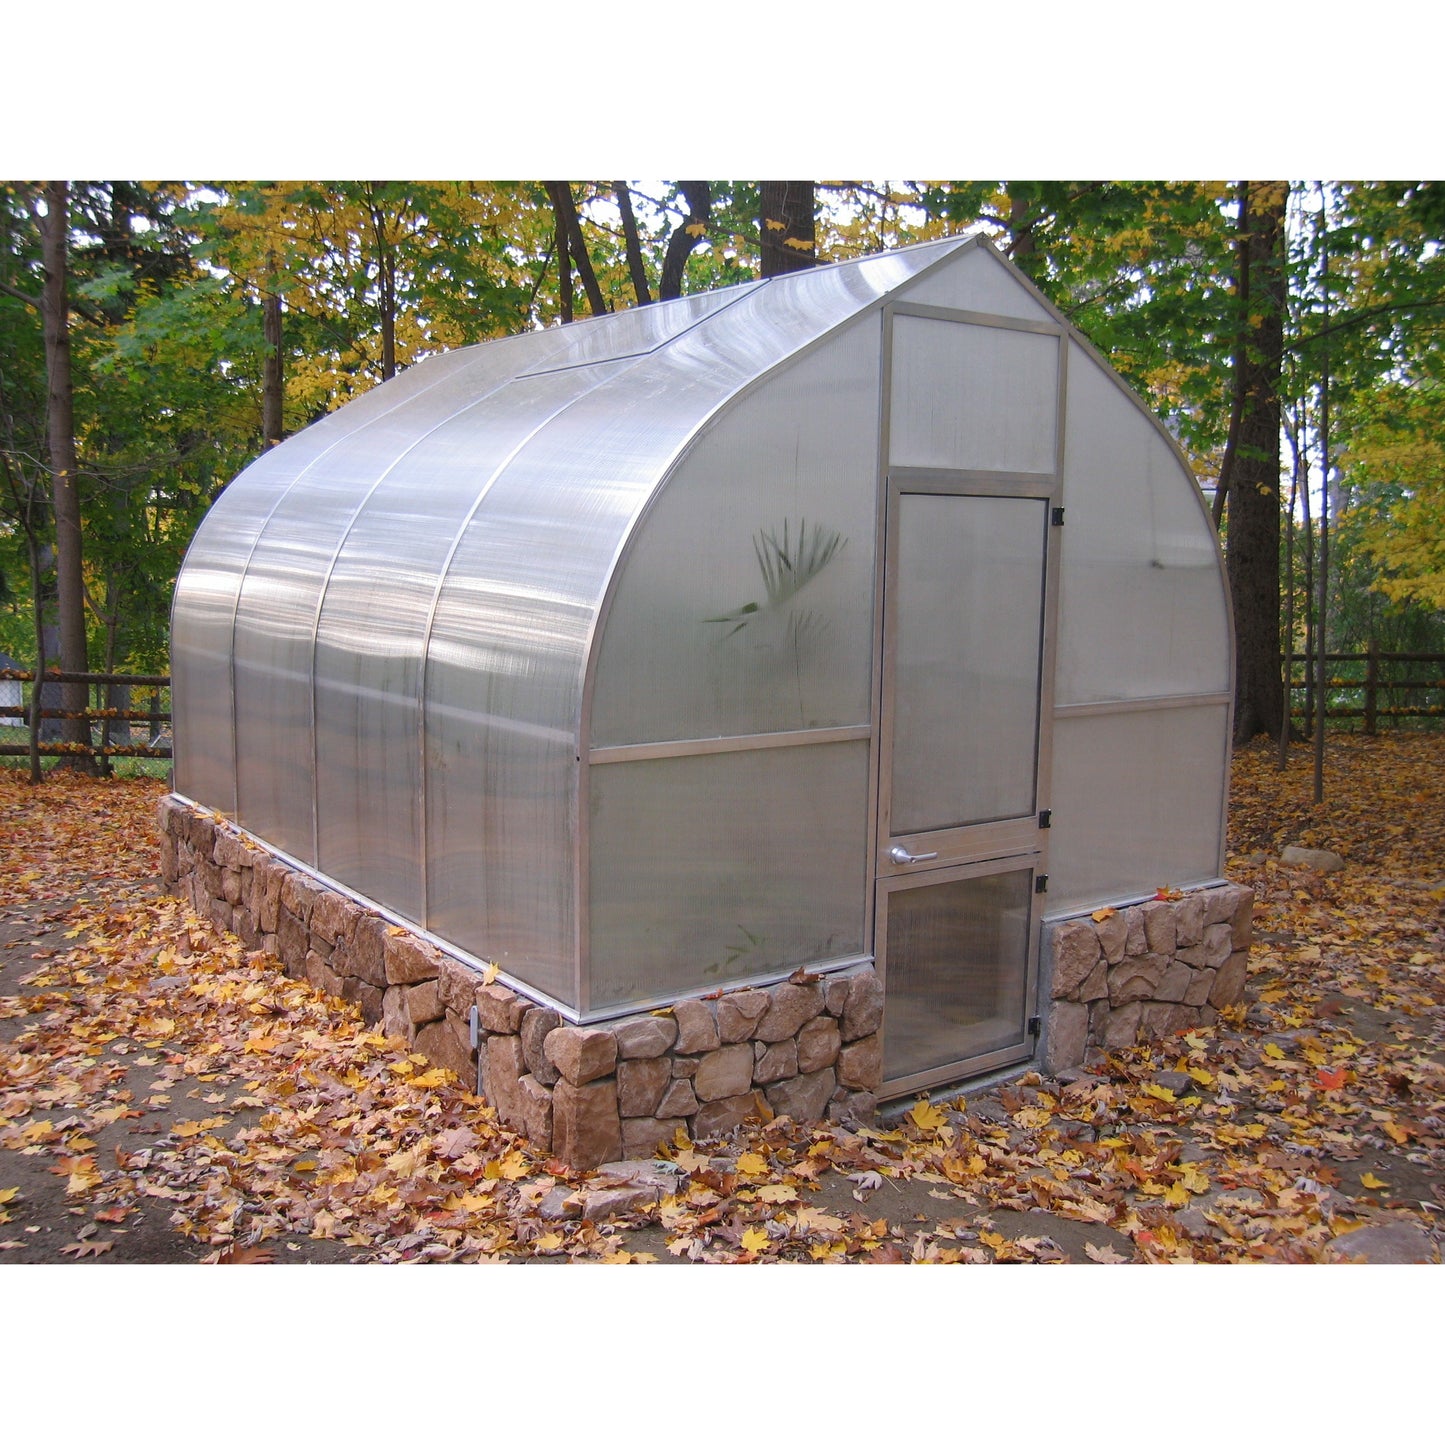 RIGA Greenhouses 4 (135 sq.ft.)